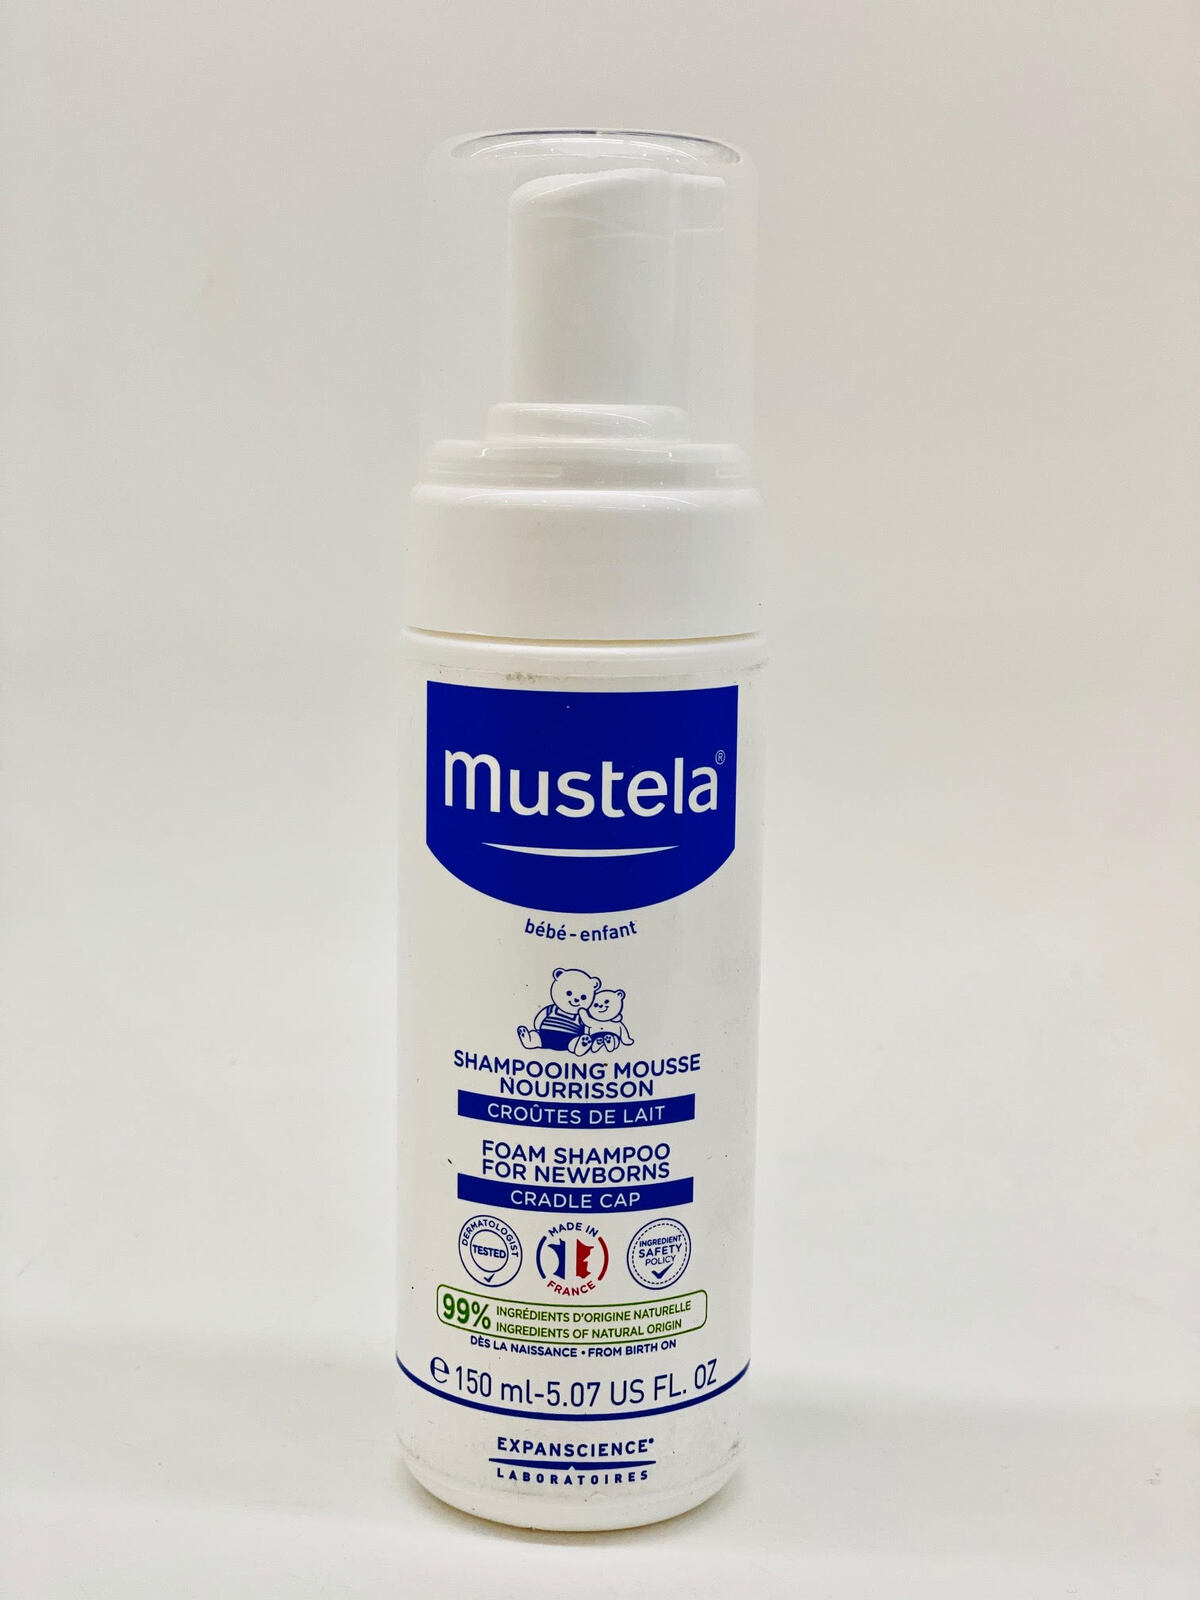 Mustela Foam Shampoo for Newborns 150mL